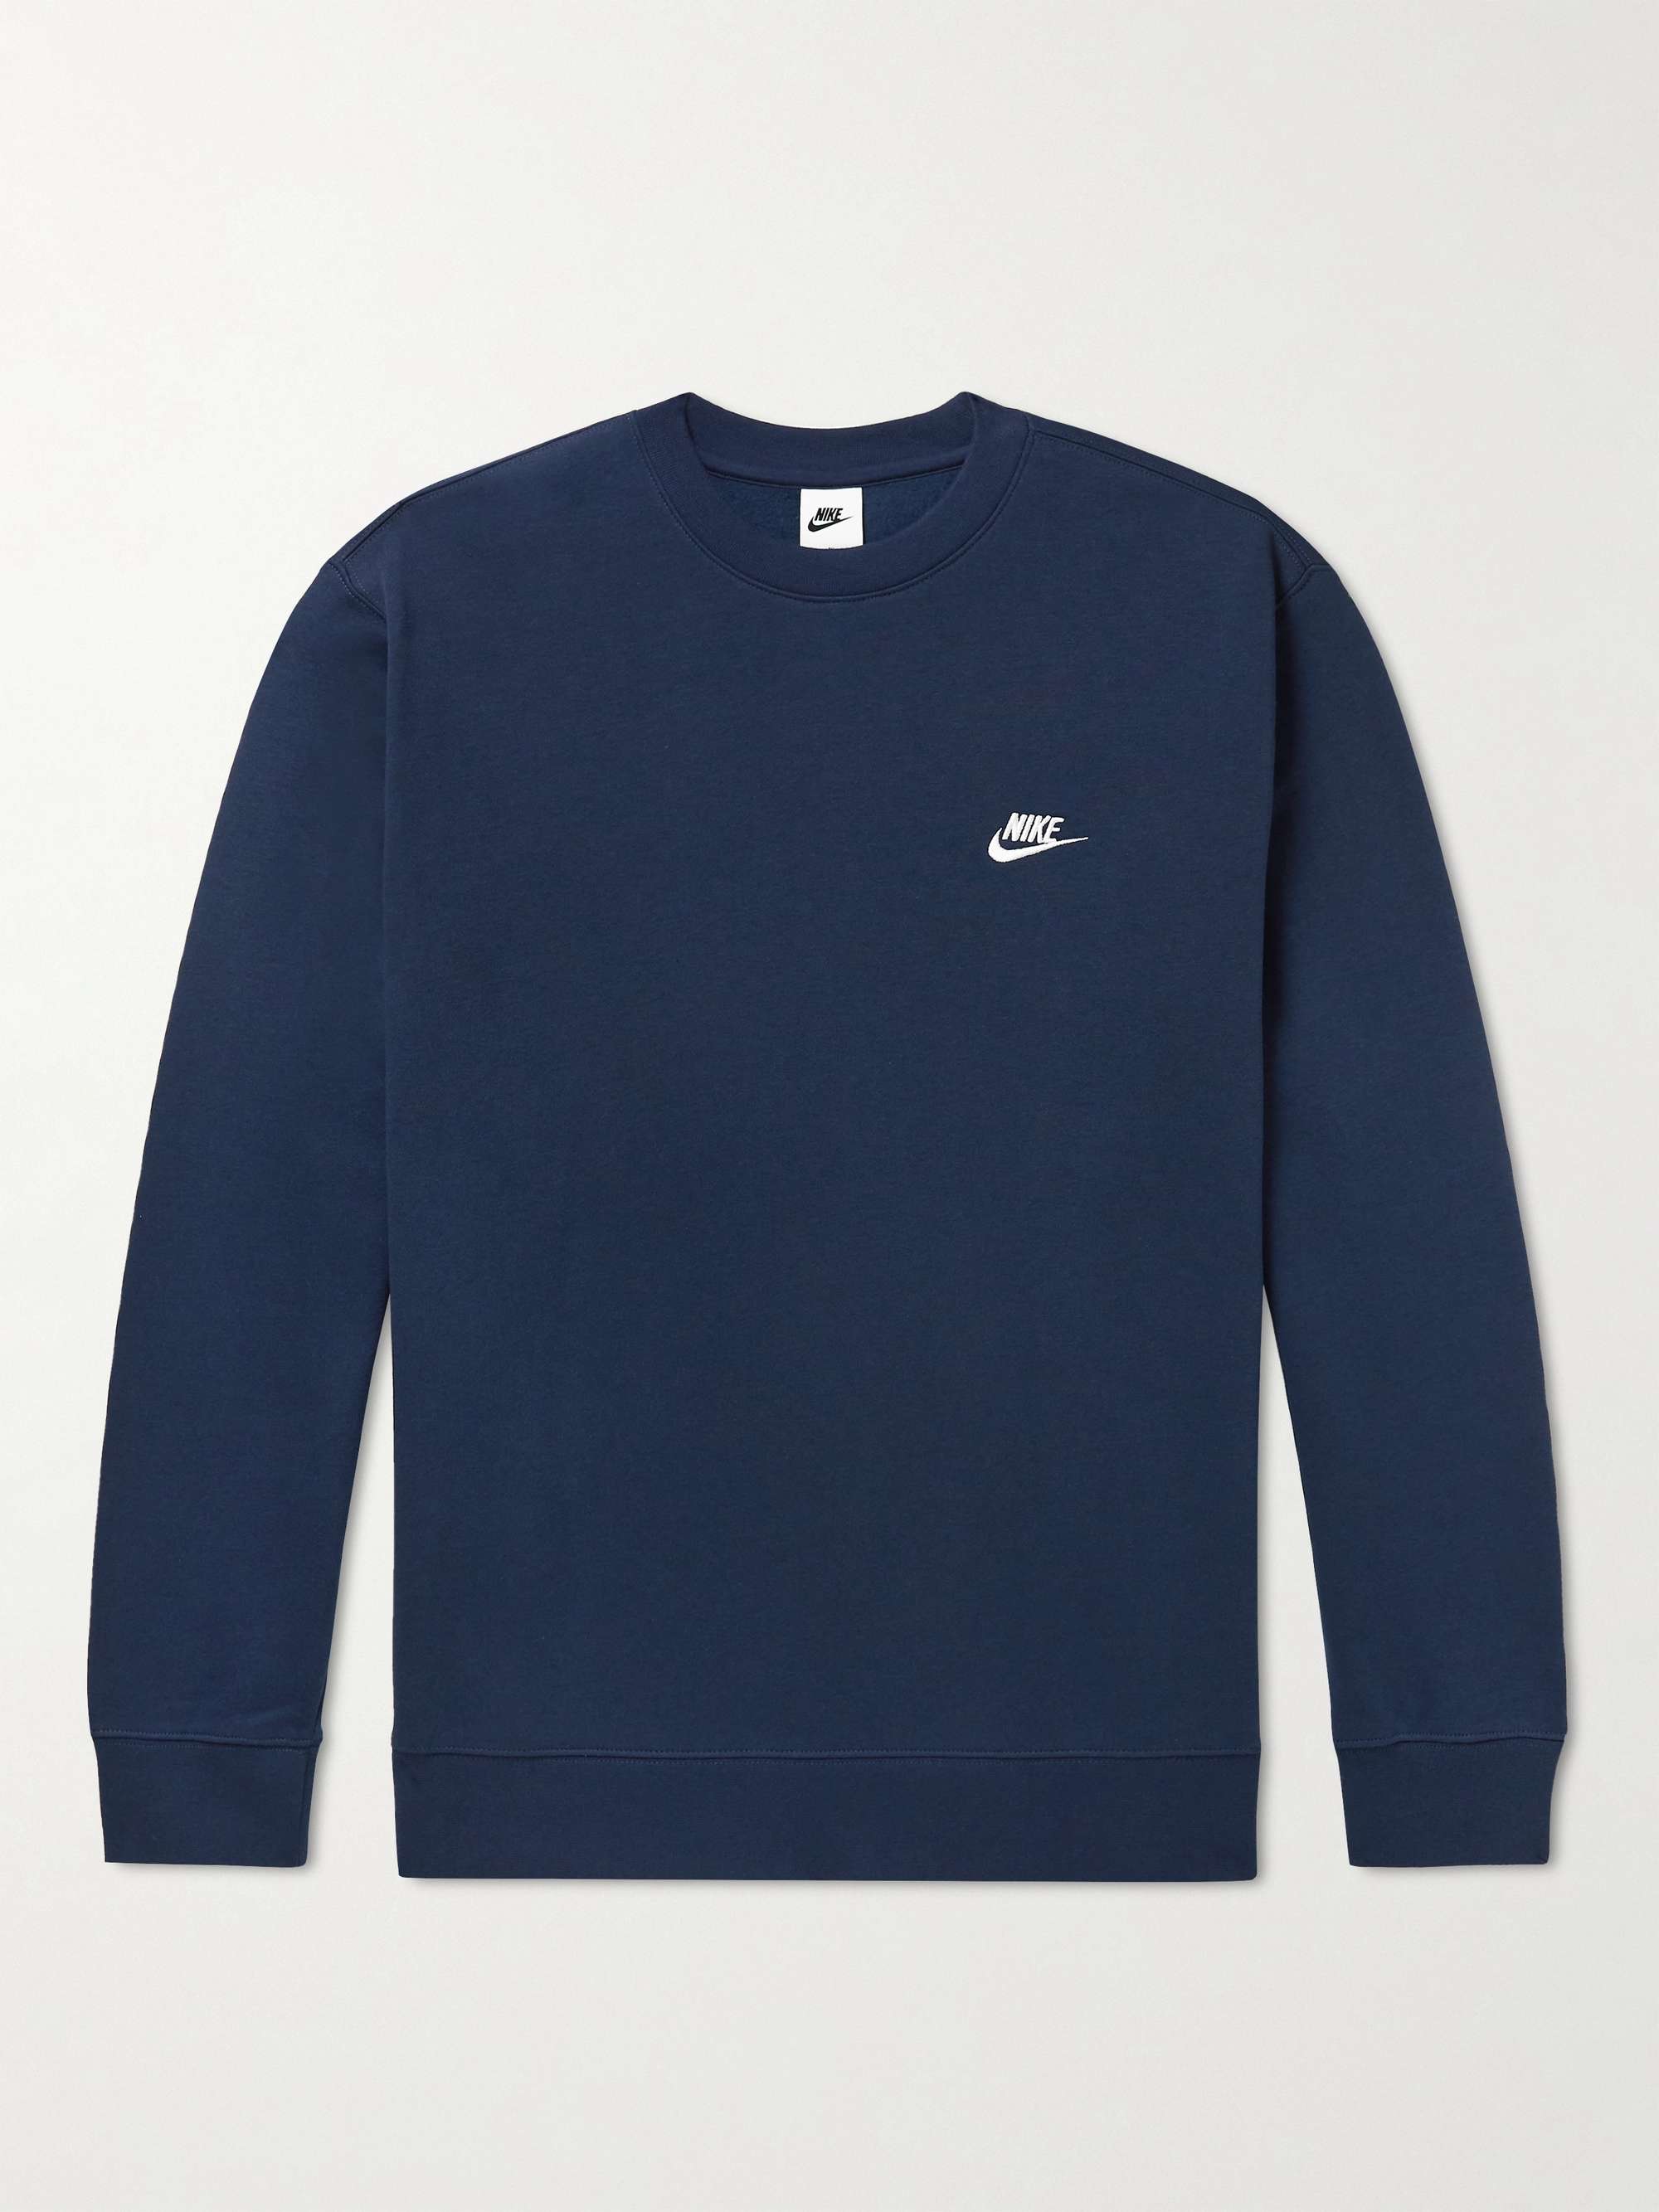 NIKE NSW Logo-Embroidered Cotton-Blend Jersey Sweatshirt | MR PORTER